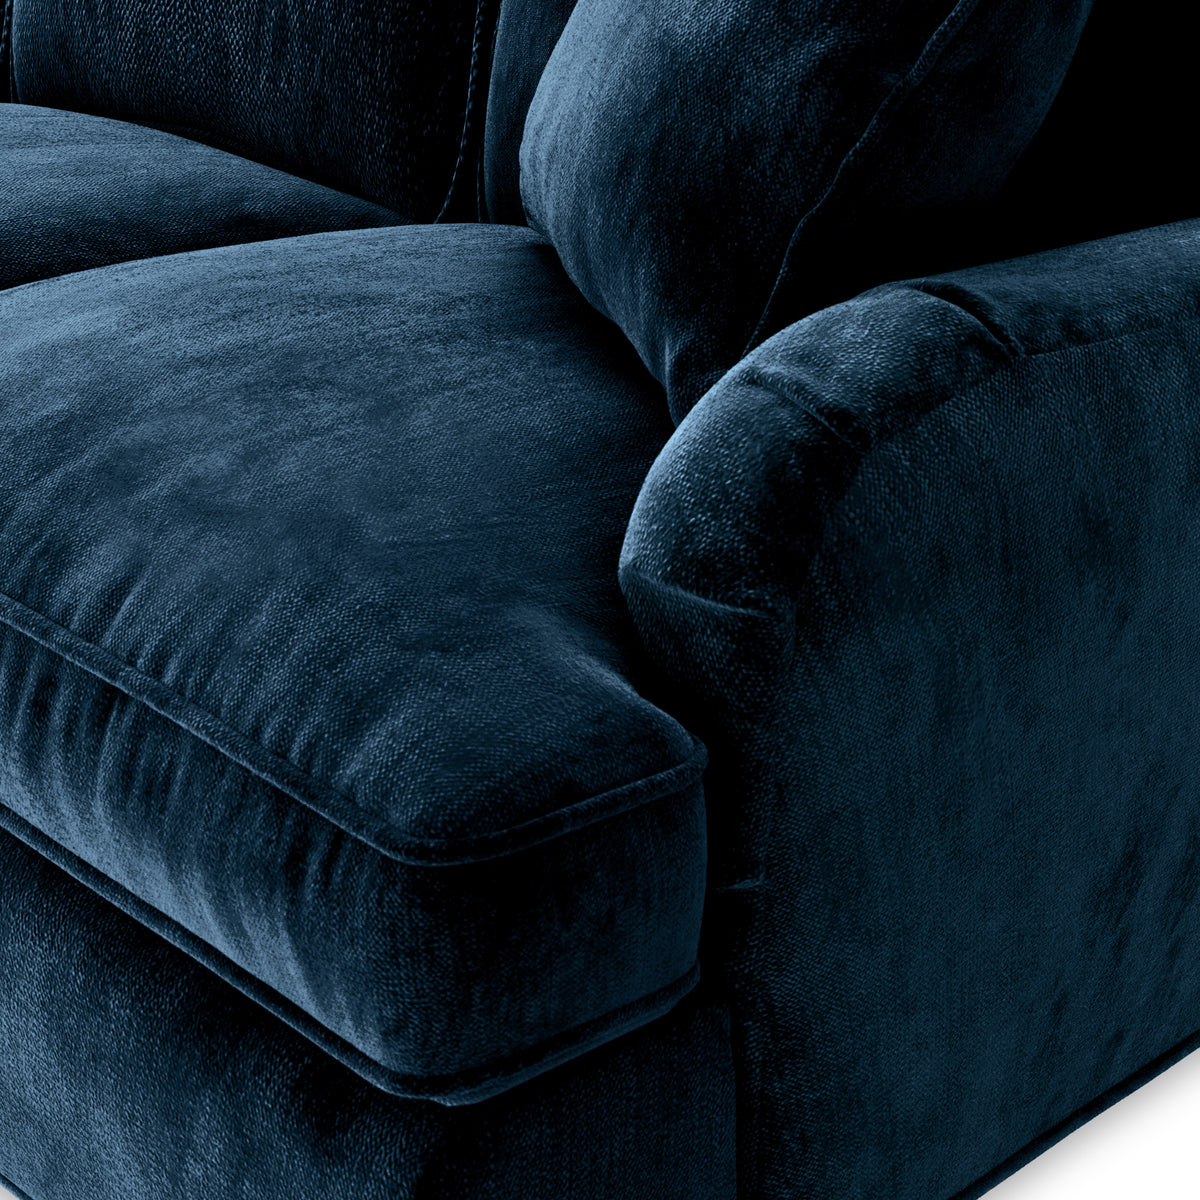 Arthur Navy Blue Large Corner Sofa from Roseland Furniture